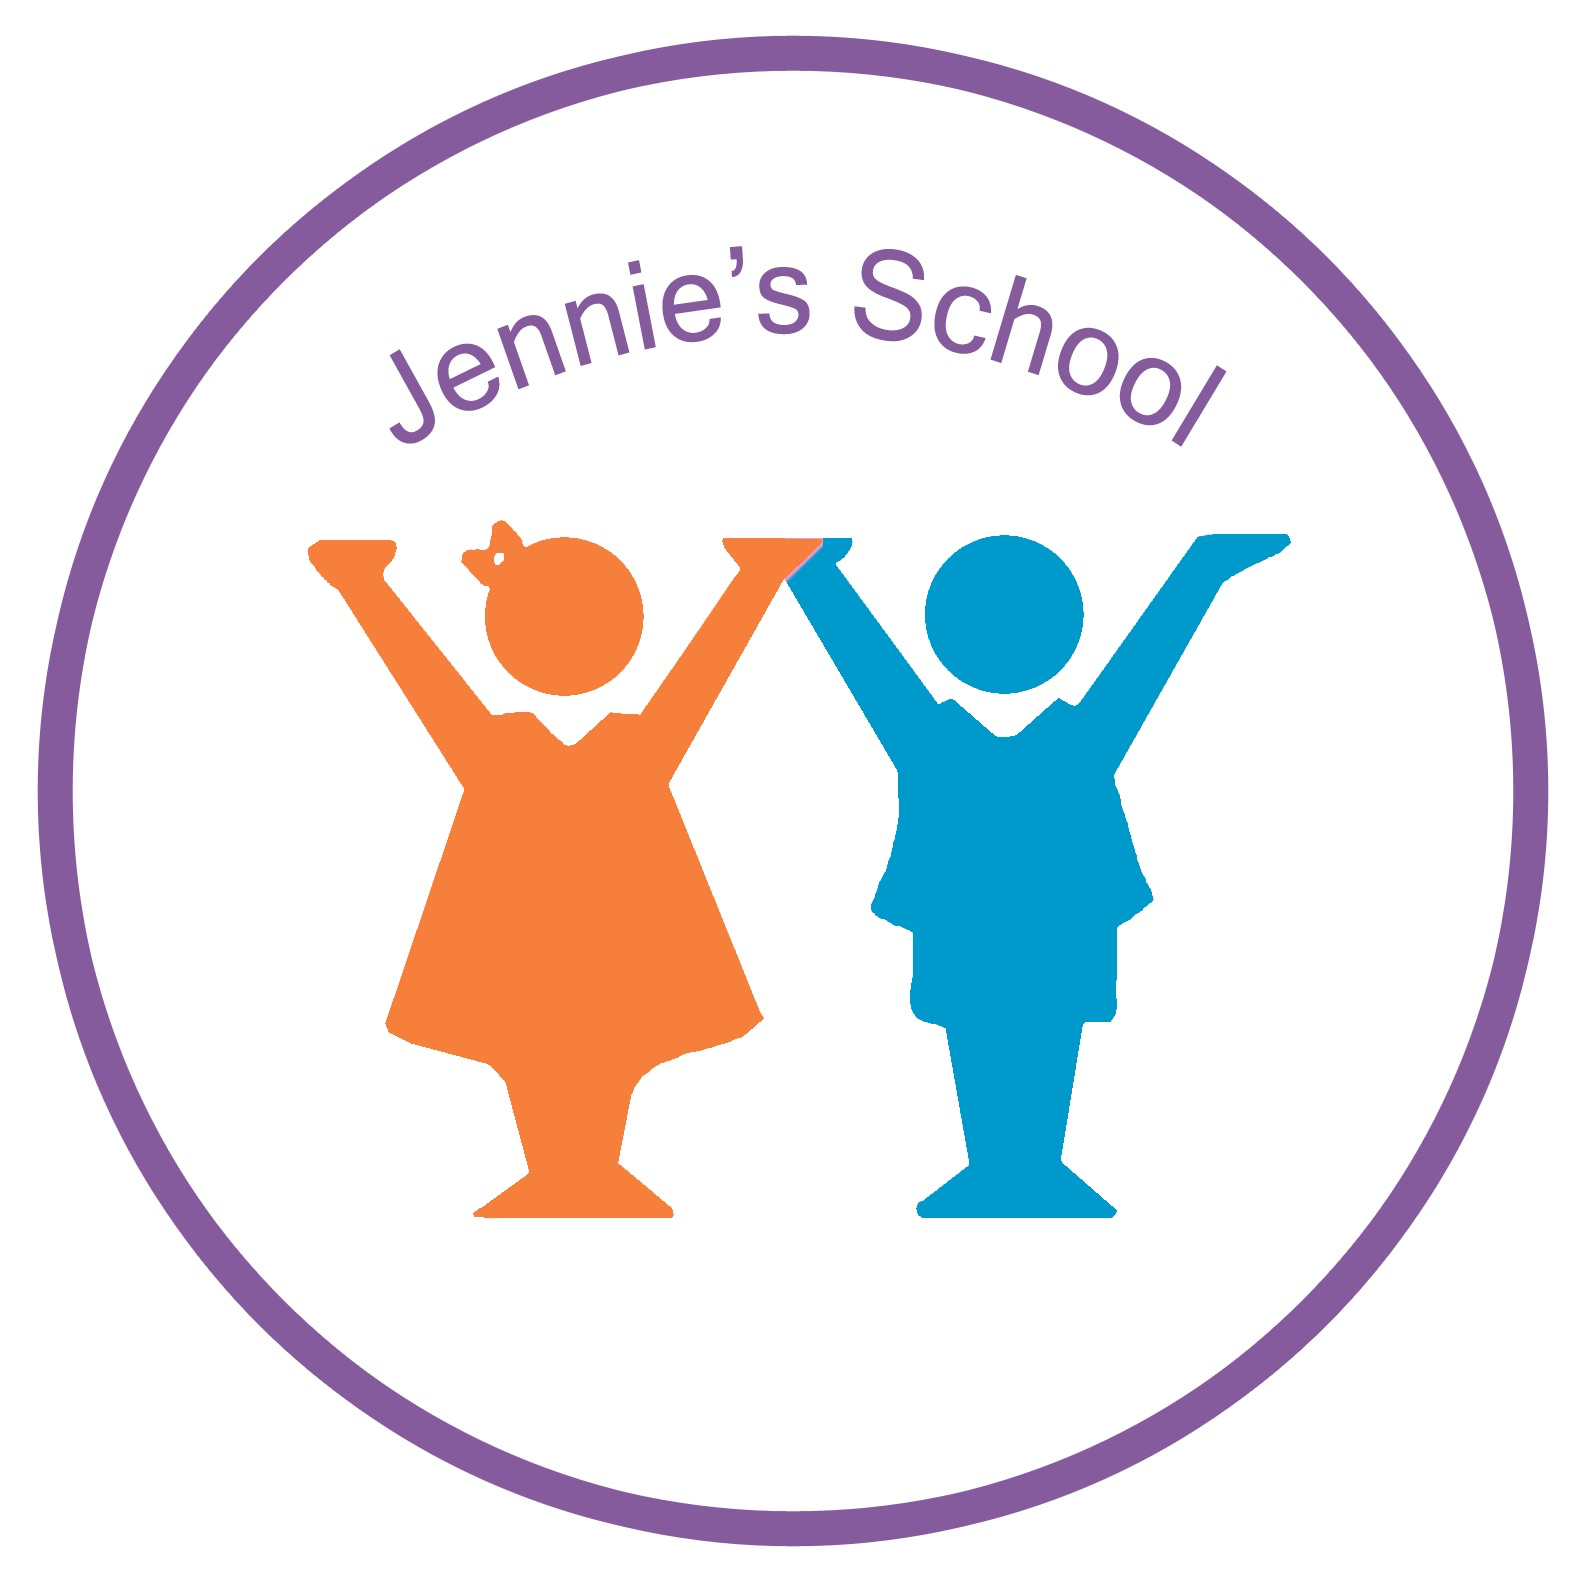 Jennie's School - Nursery School Logo